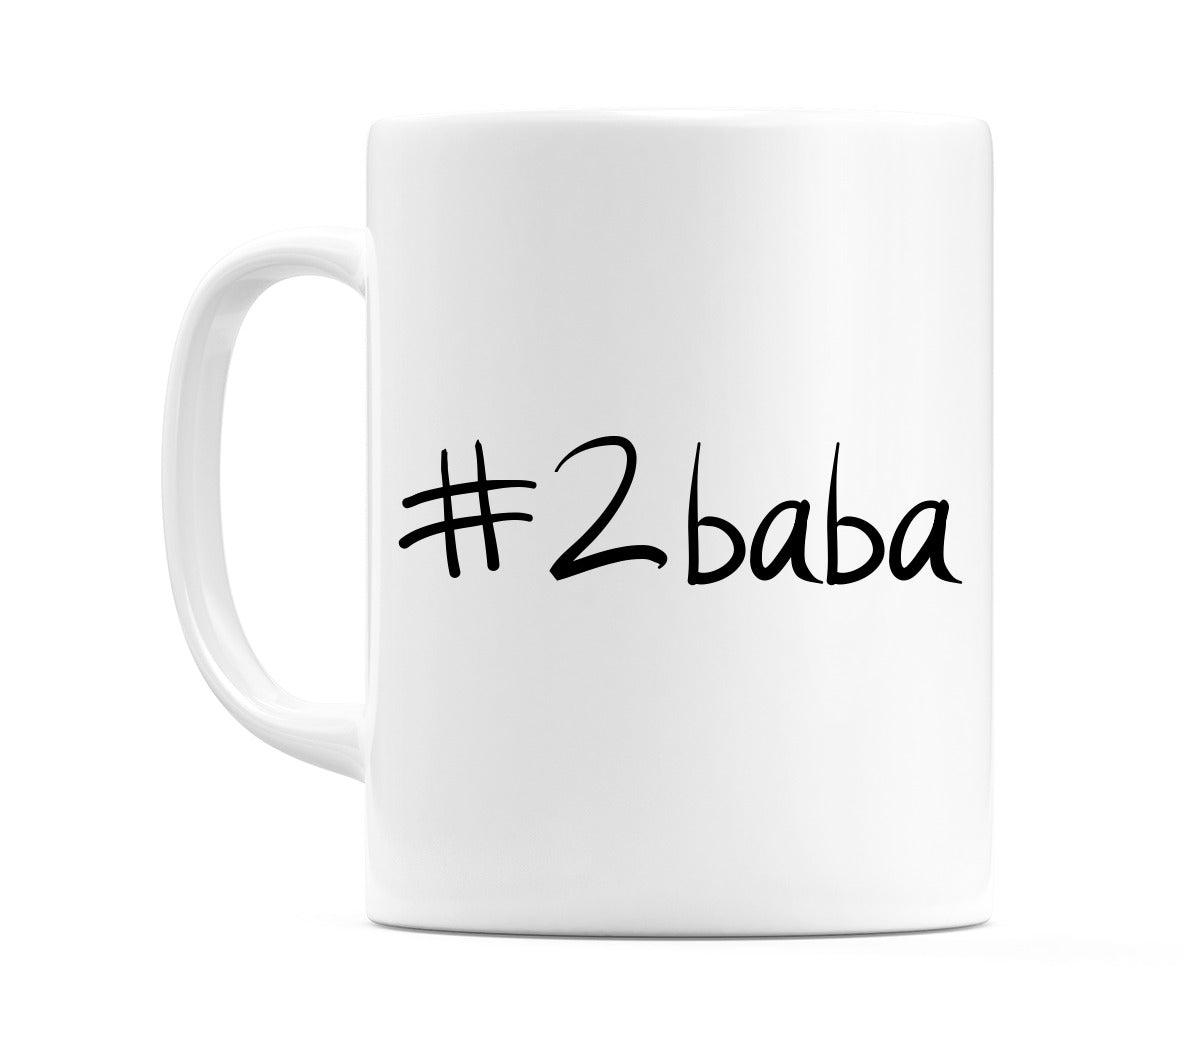 #2baba Mug